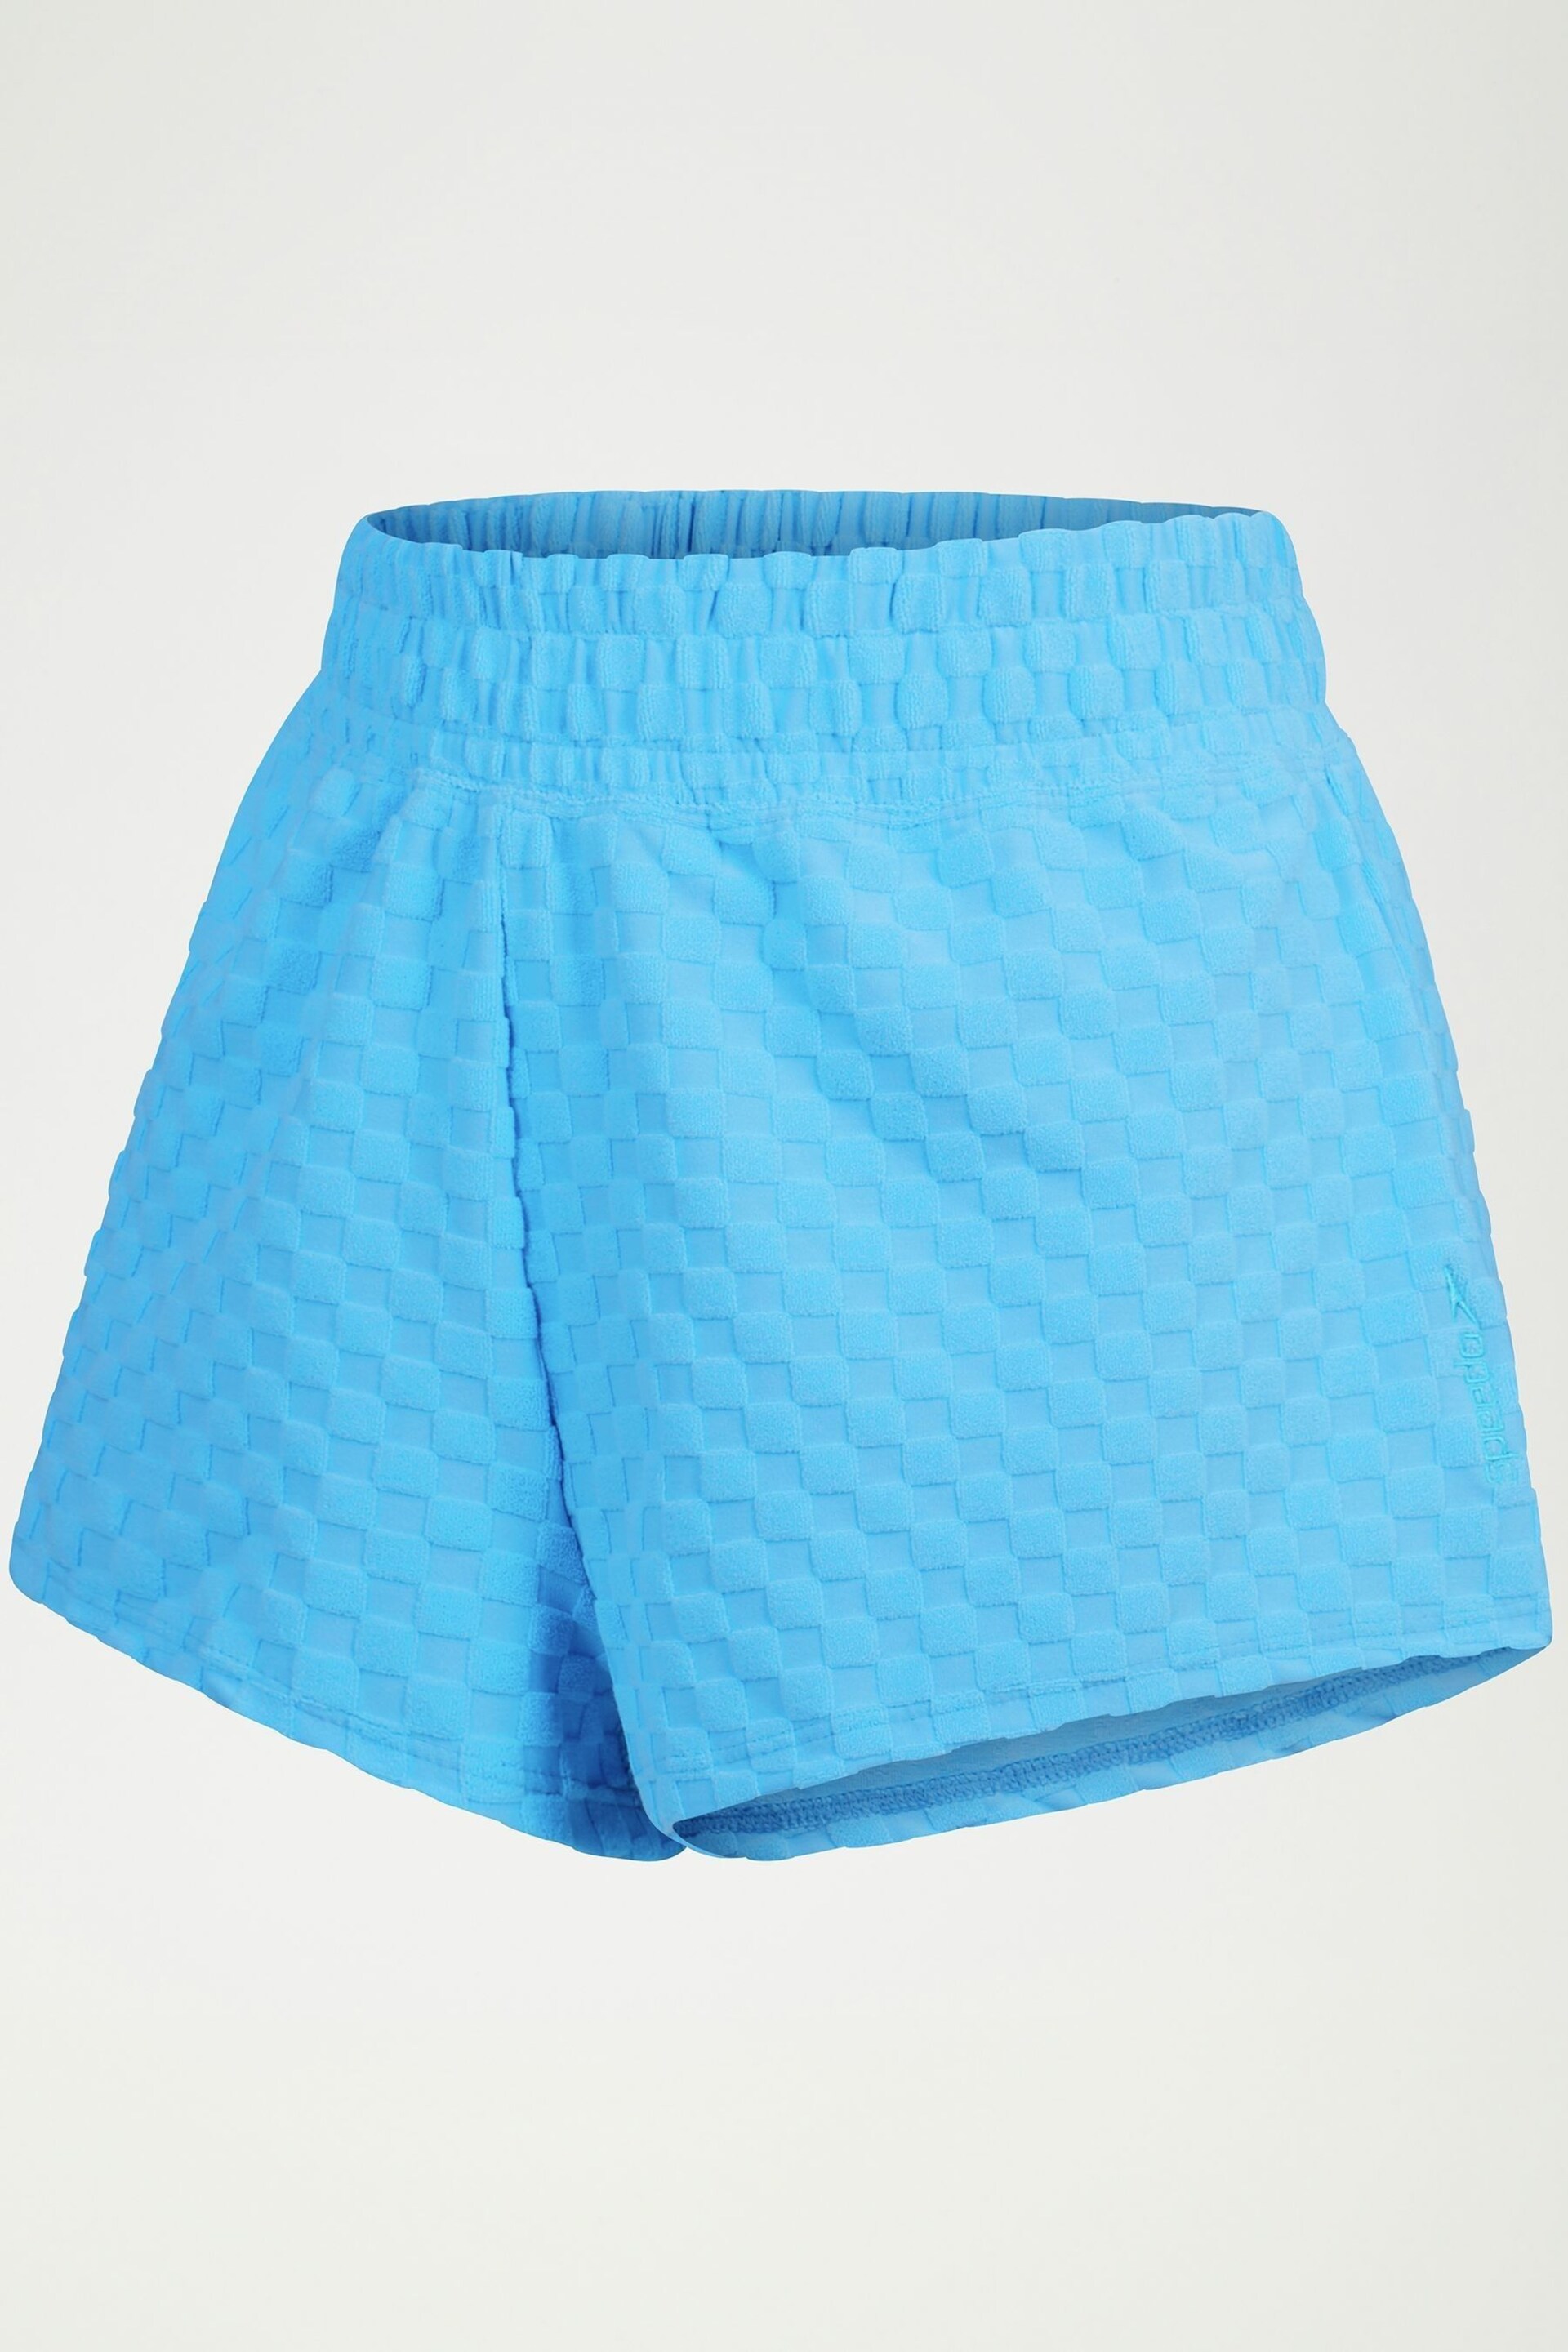 Speedo Blue Terry 420 Shorts - Image 6 of 6